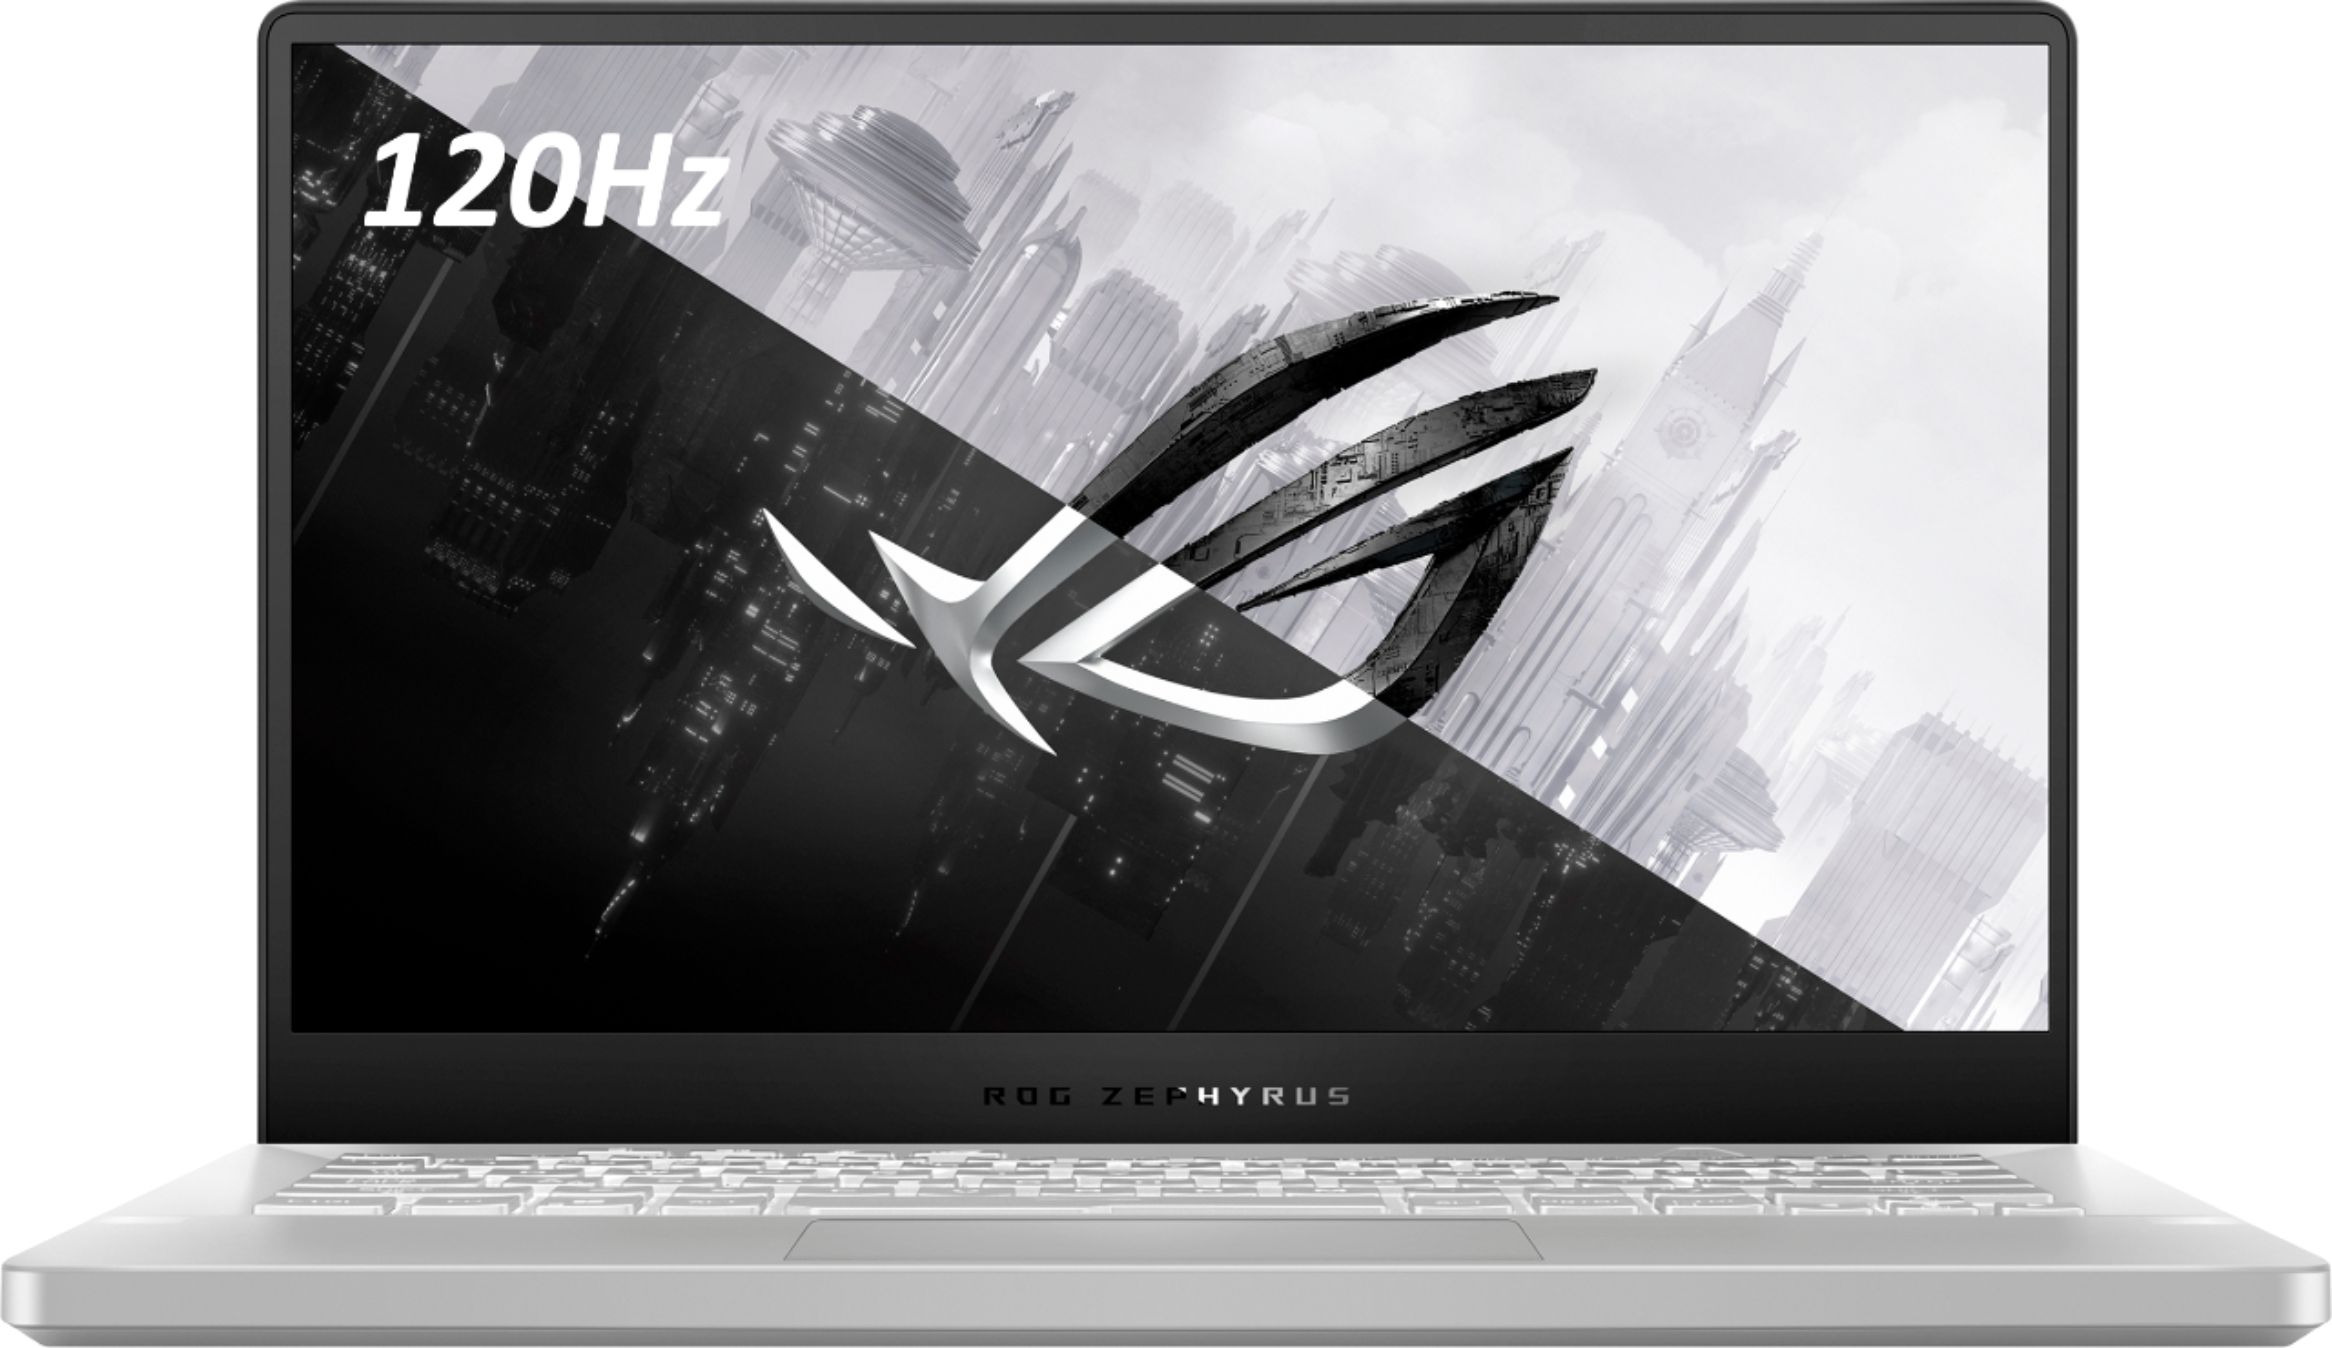 Asus Rog Zephyrus G14 14 Gaming Laptop Amd Ryzen 9 16gb Memory Nvidia Geforce Rtx 2060 Max Q 1tb Ssd Moonlight White Ga401iv Br9n6 Best Buy